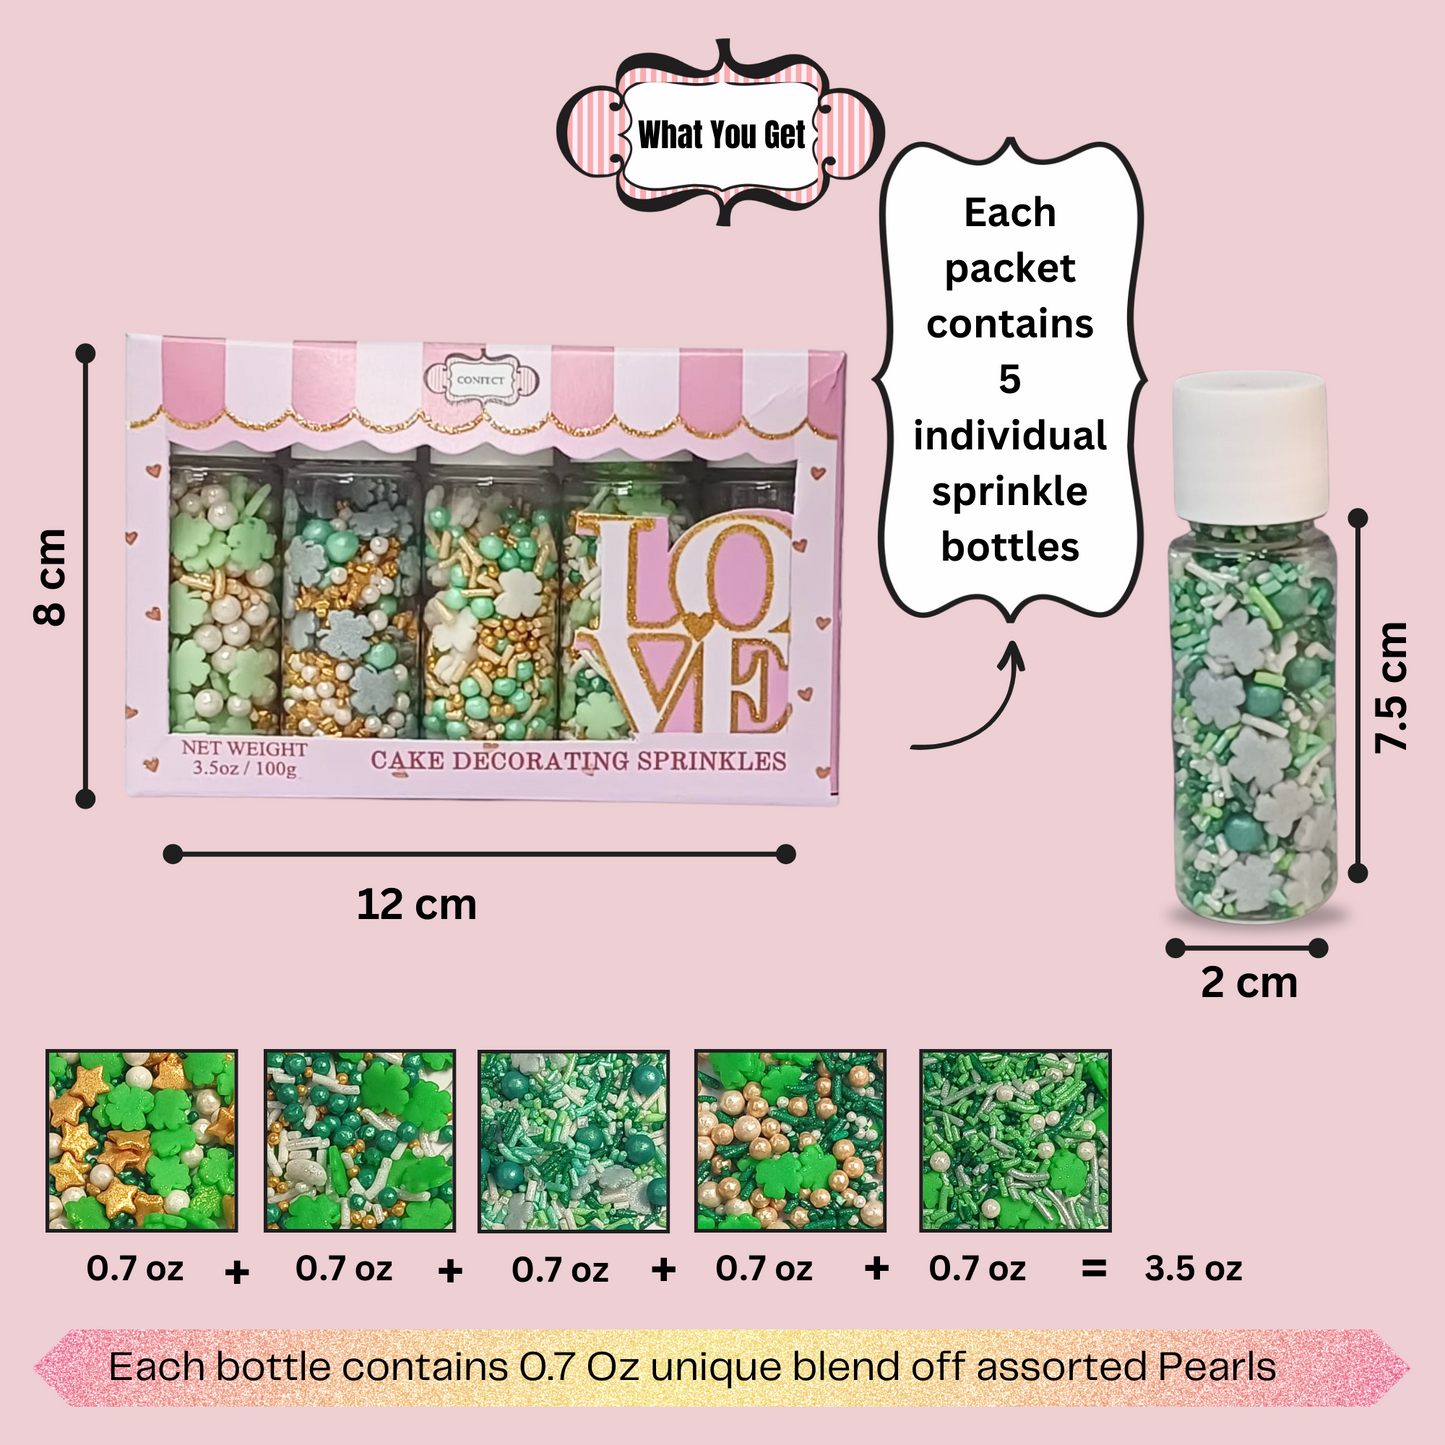 St. Patrick's Sprinkles PS Multipack 10 - 100 gms